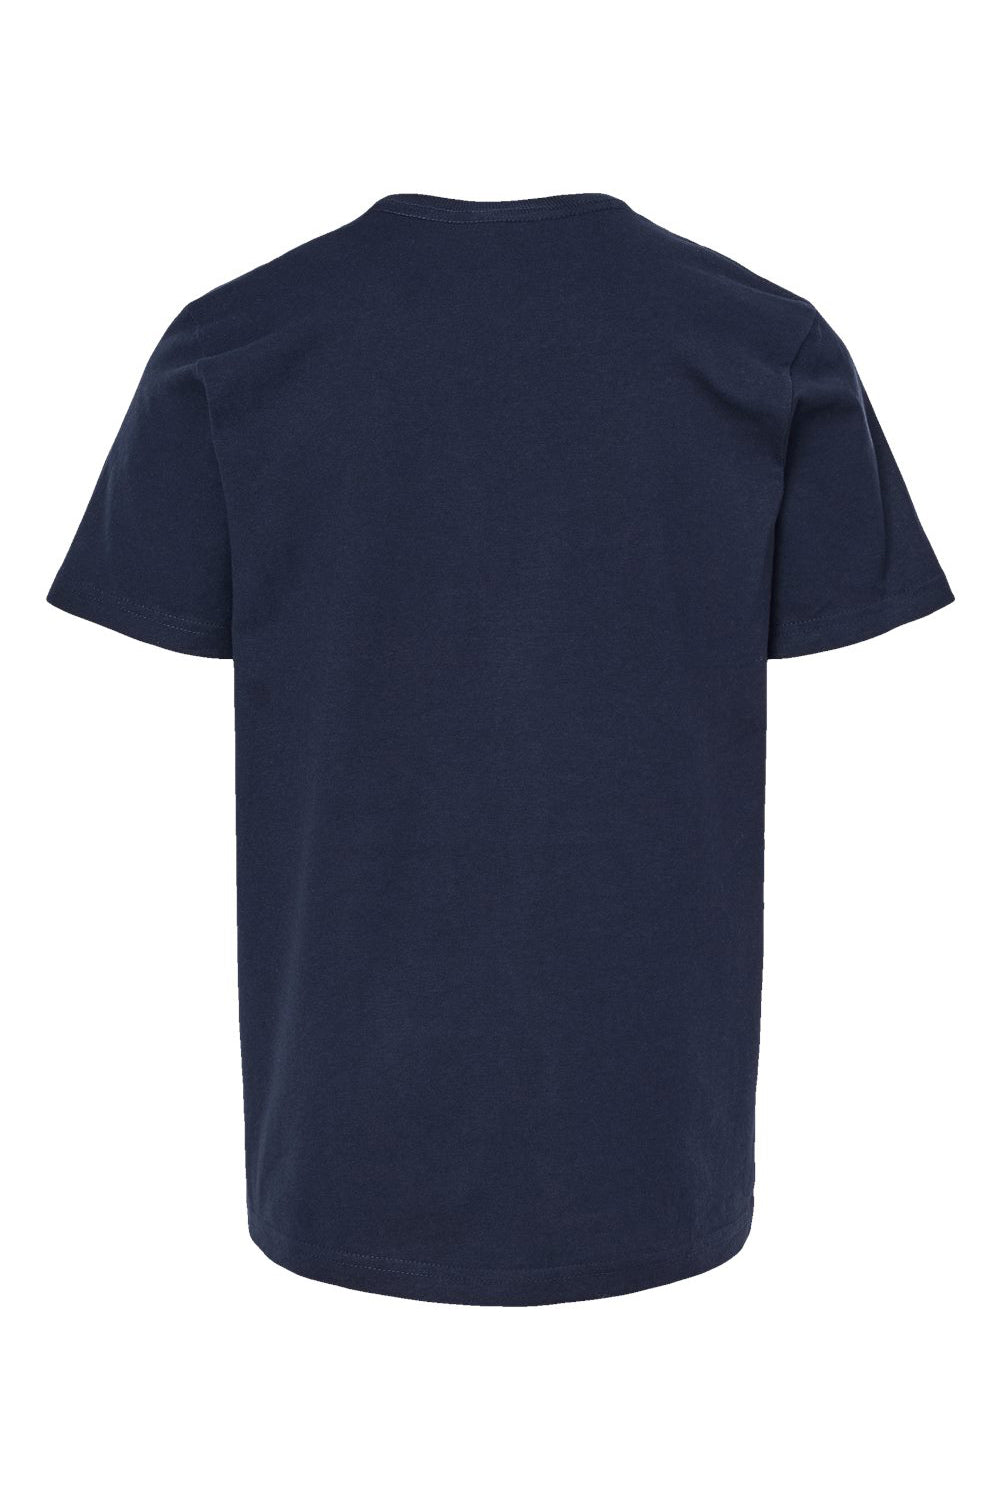 Tultex 295 Youth Jersey Short Sleeve Crewneck T-Shirt Navy Blue Flat Back